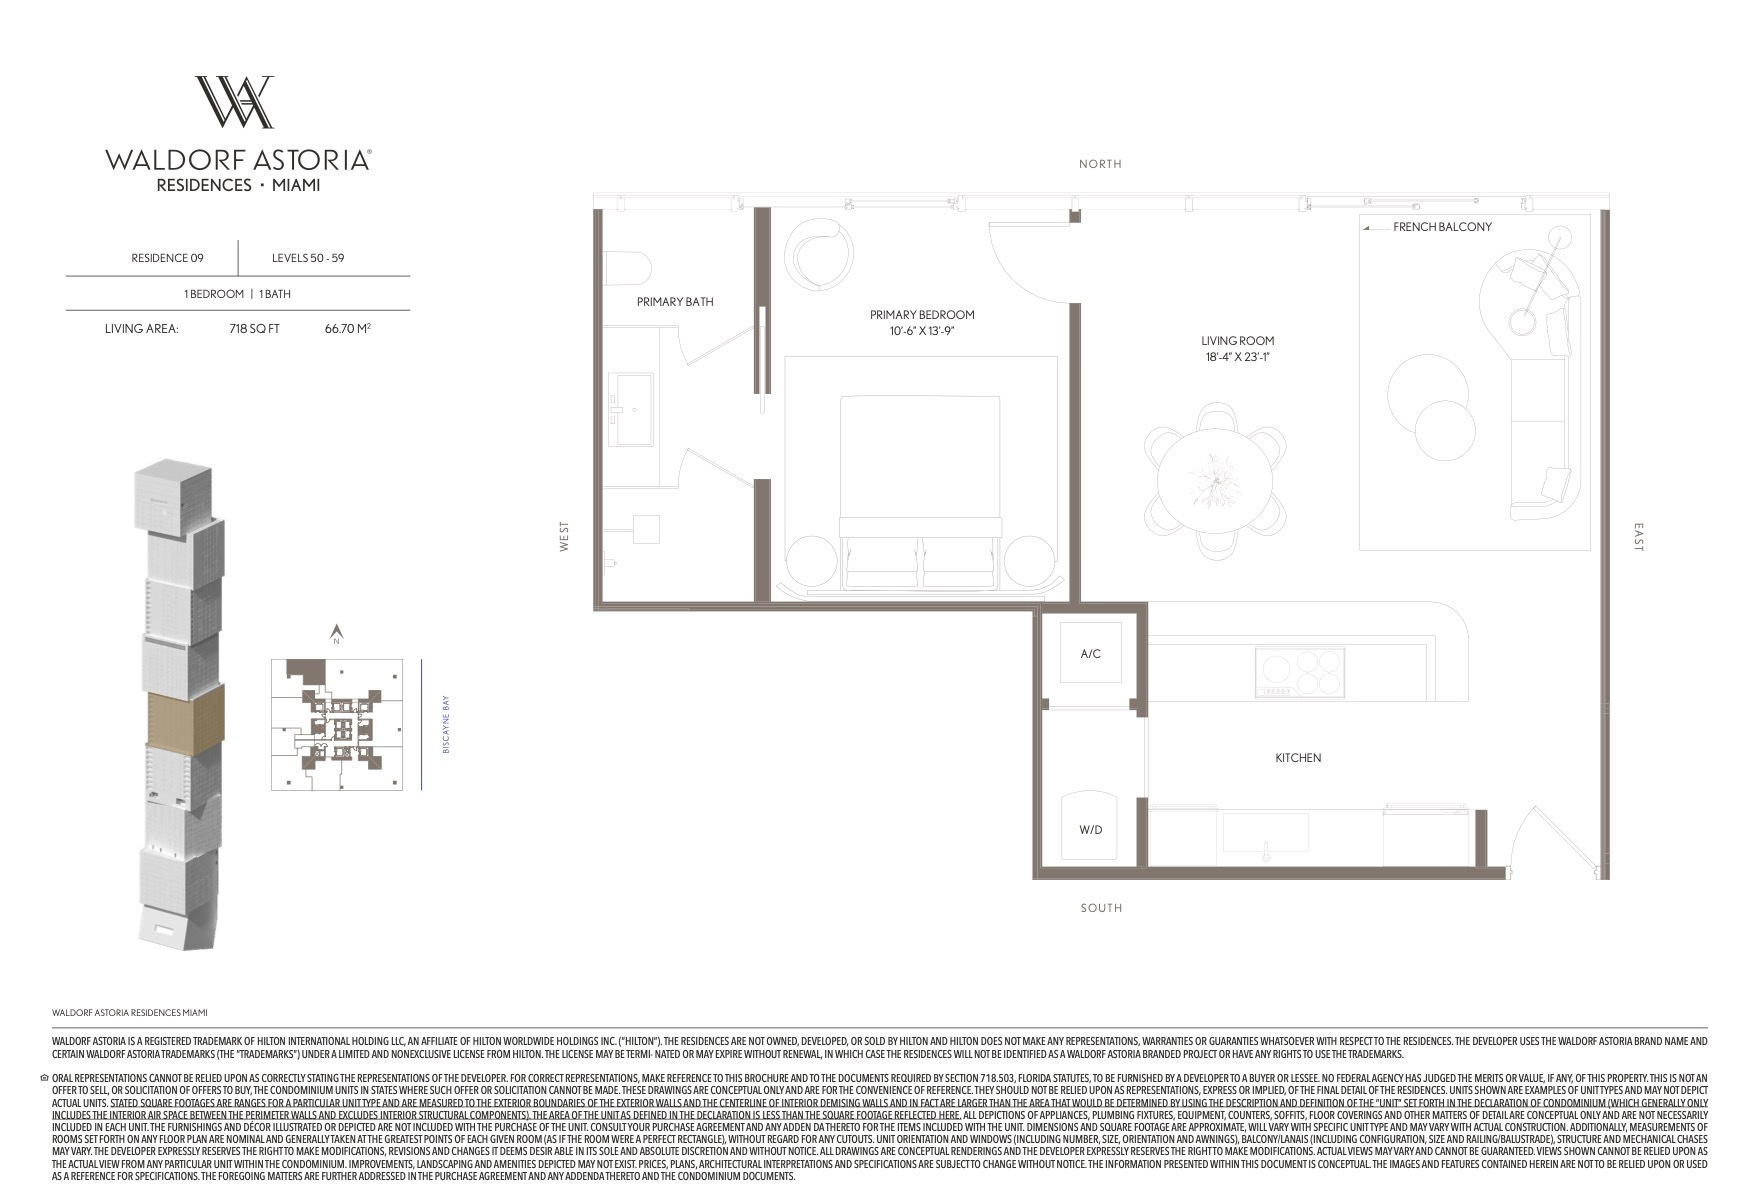 Floor Plan for Waldorf Astoria Miami Floorplans, Residence 09 Levels 50-59